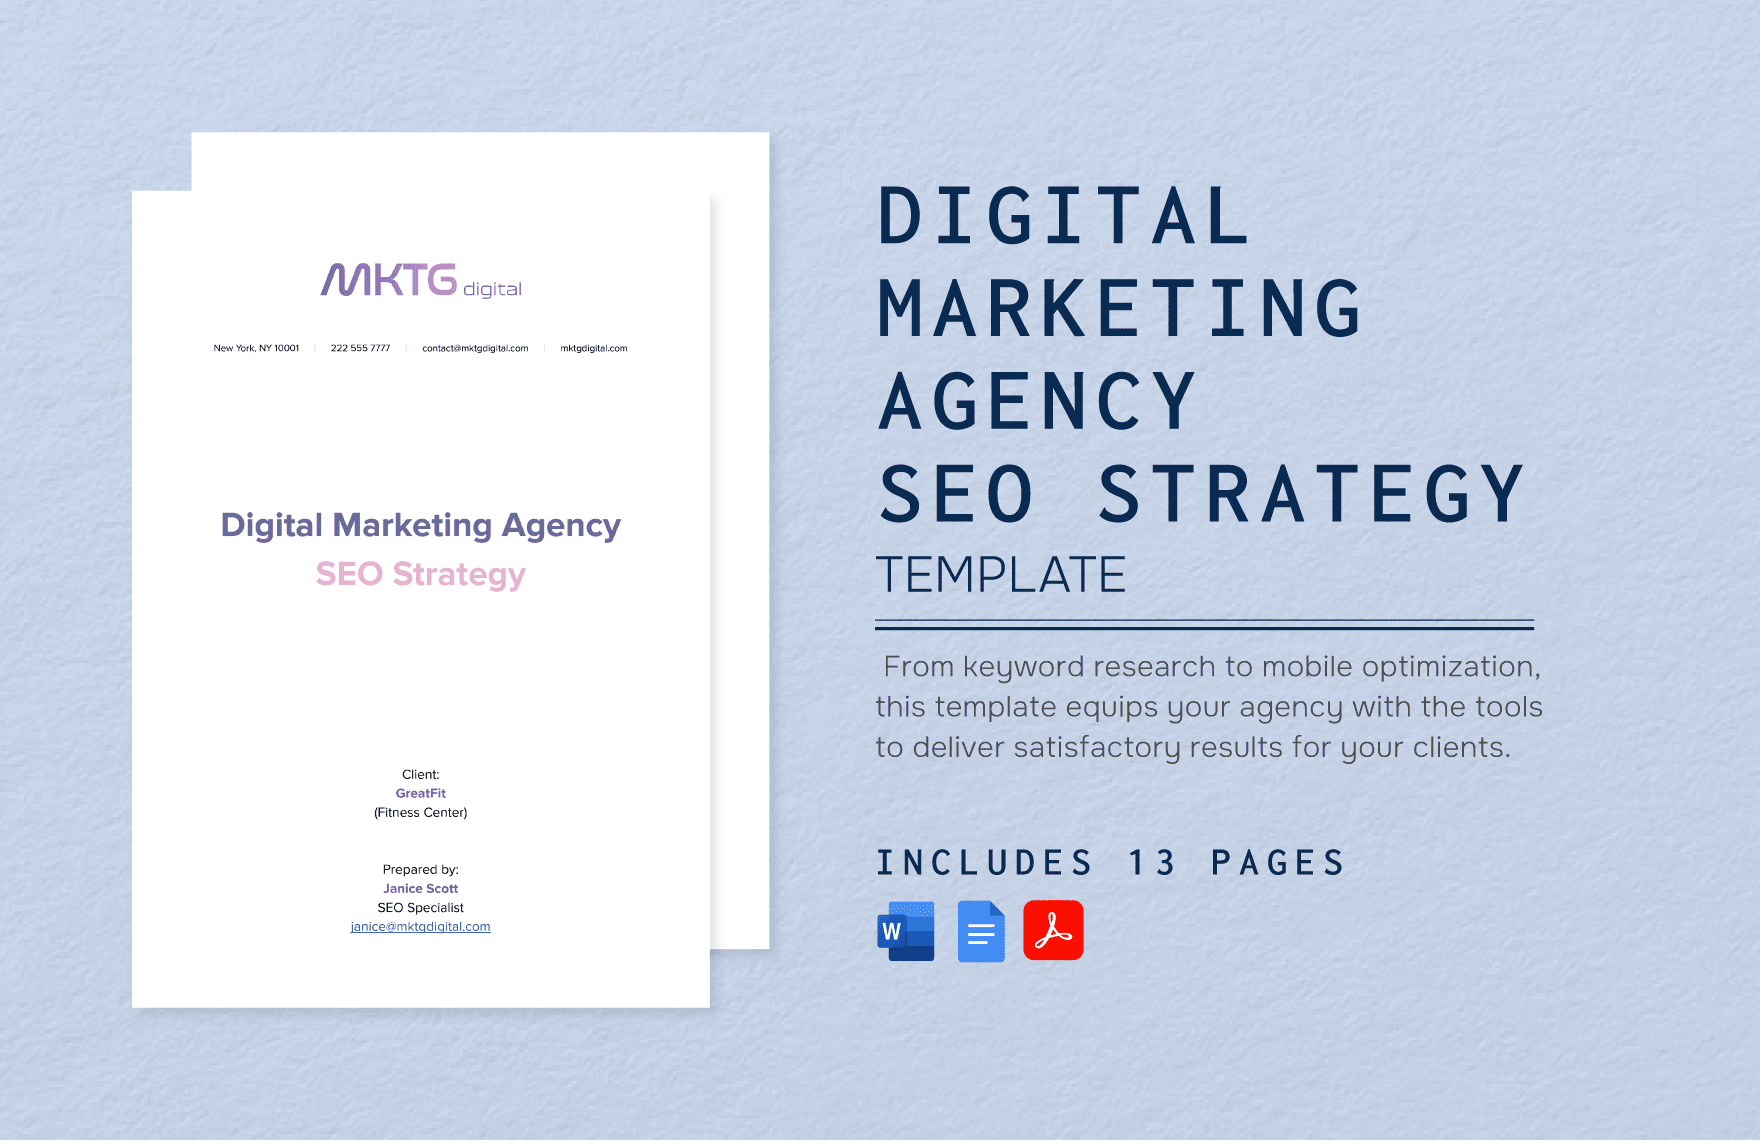 Digital Marketing Agency SEO Strategy Template